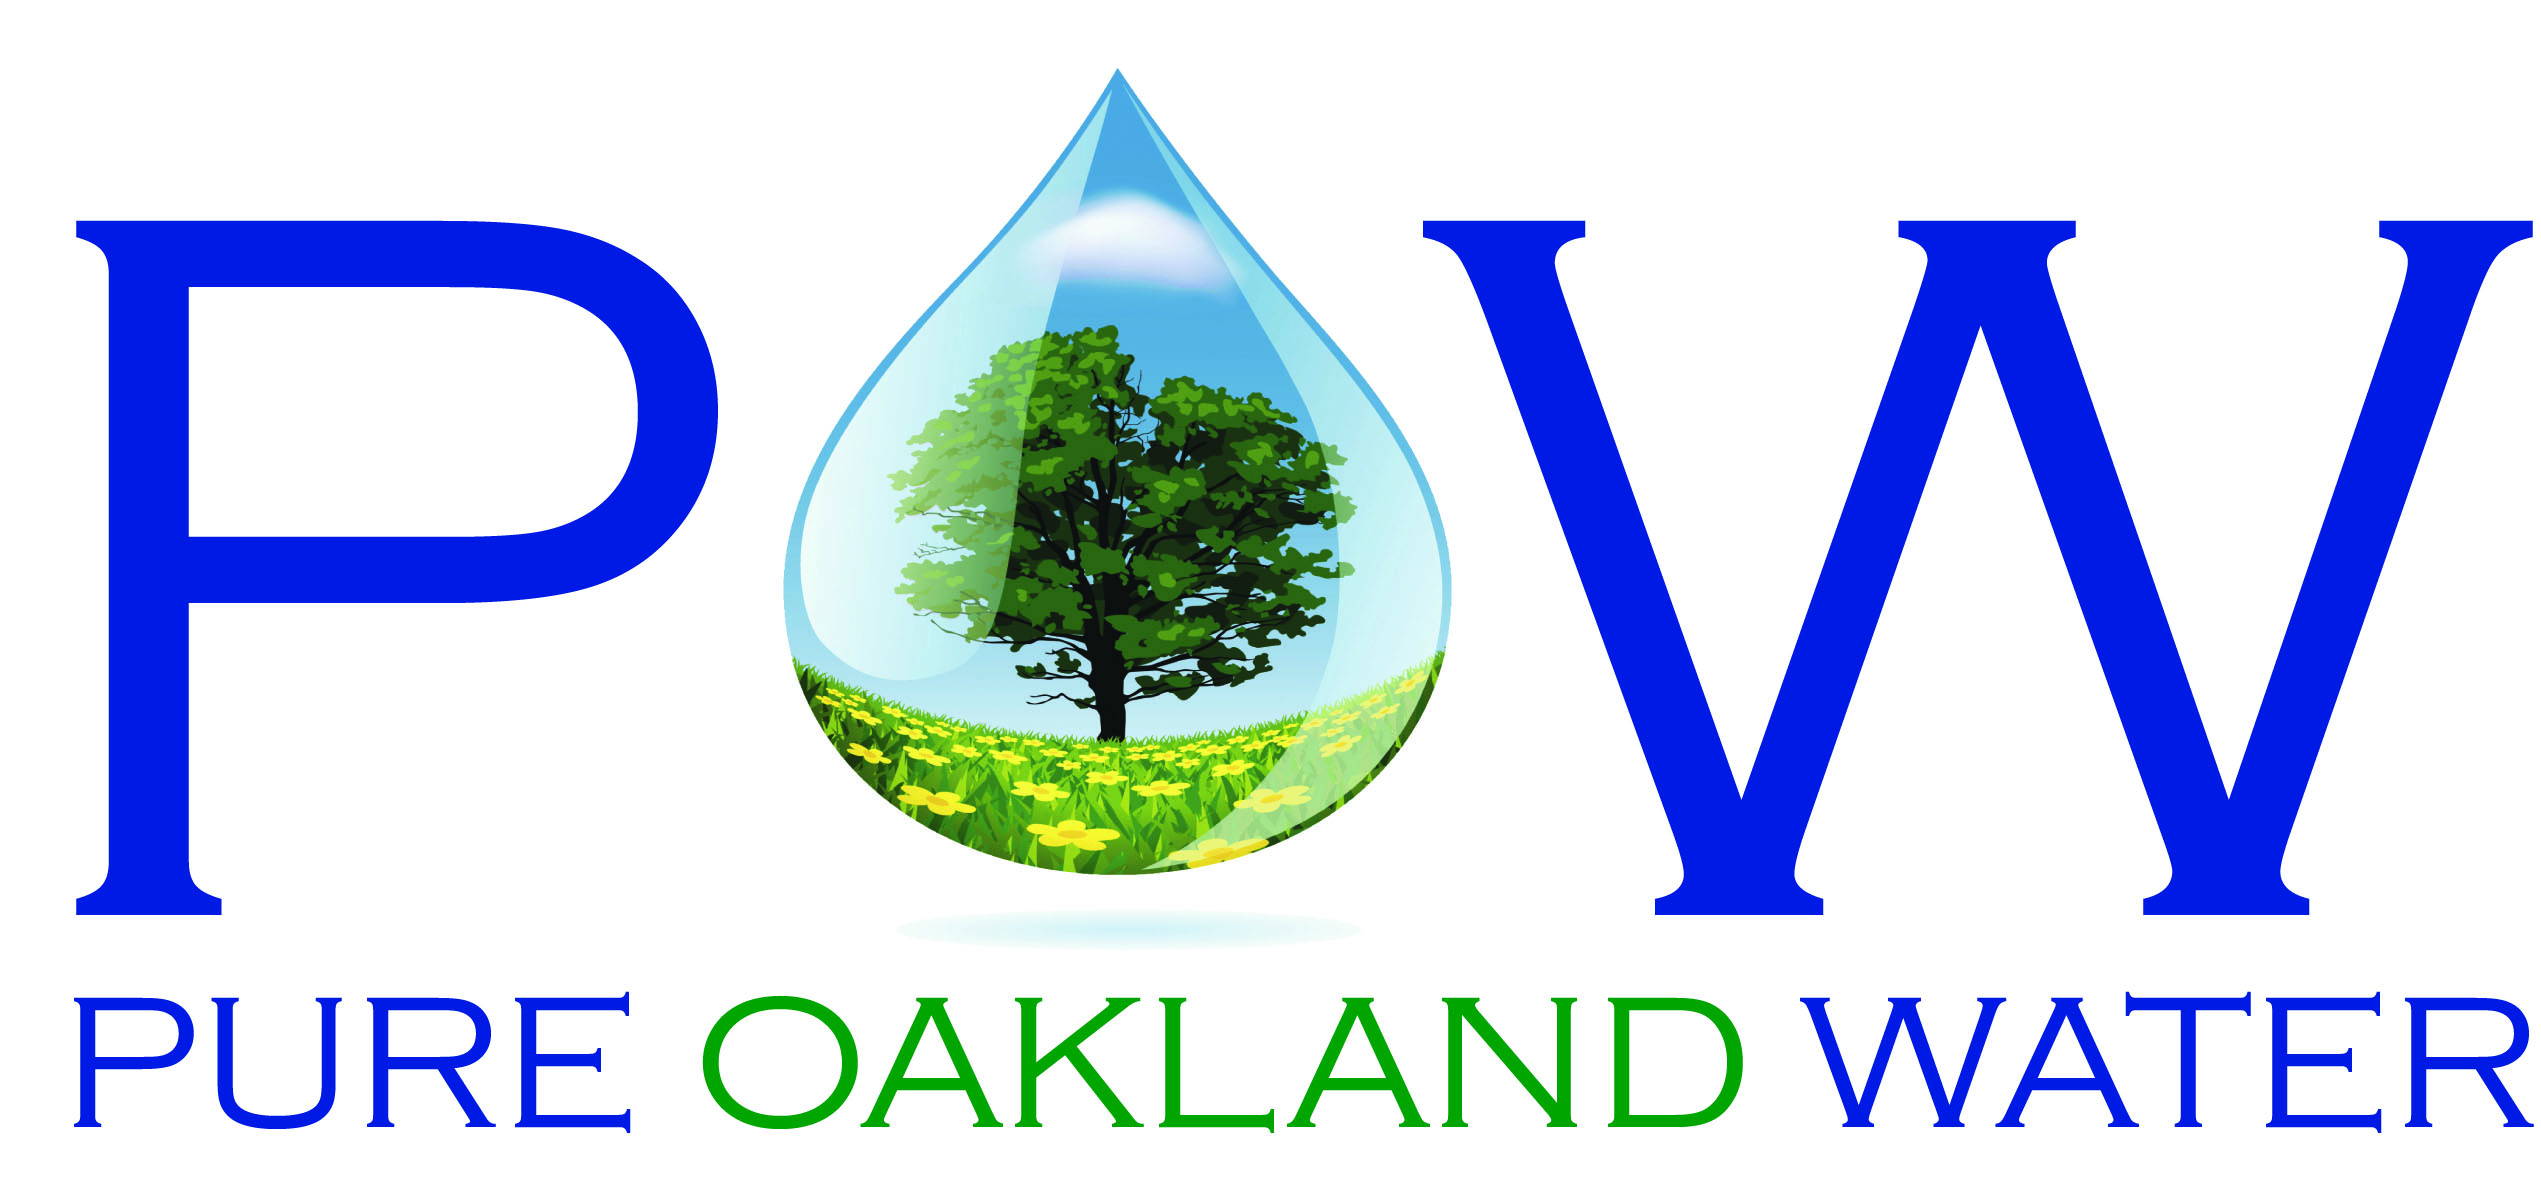 Pure Oakland Water logo